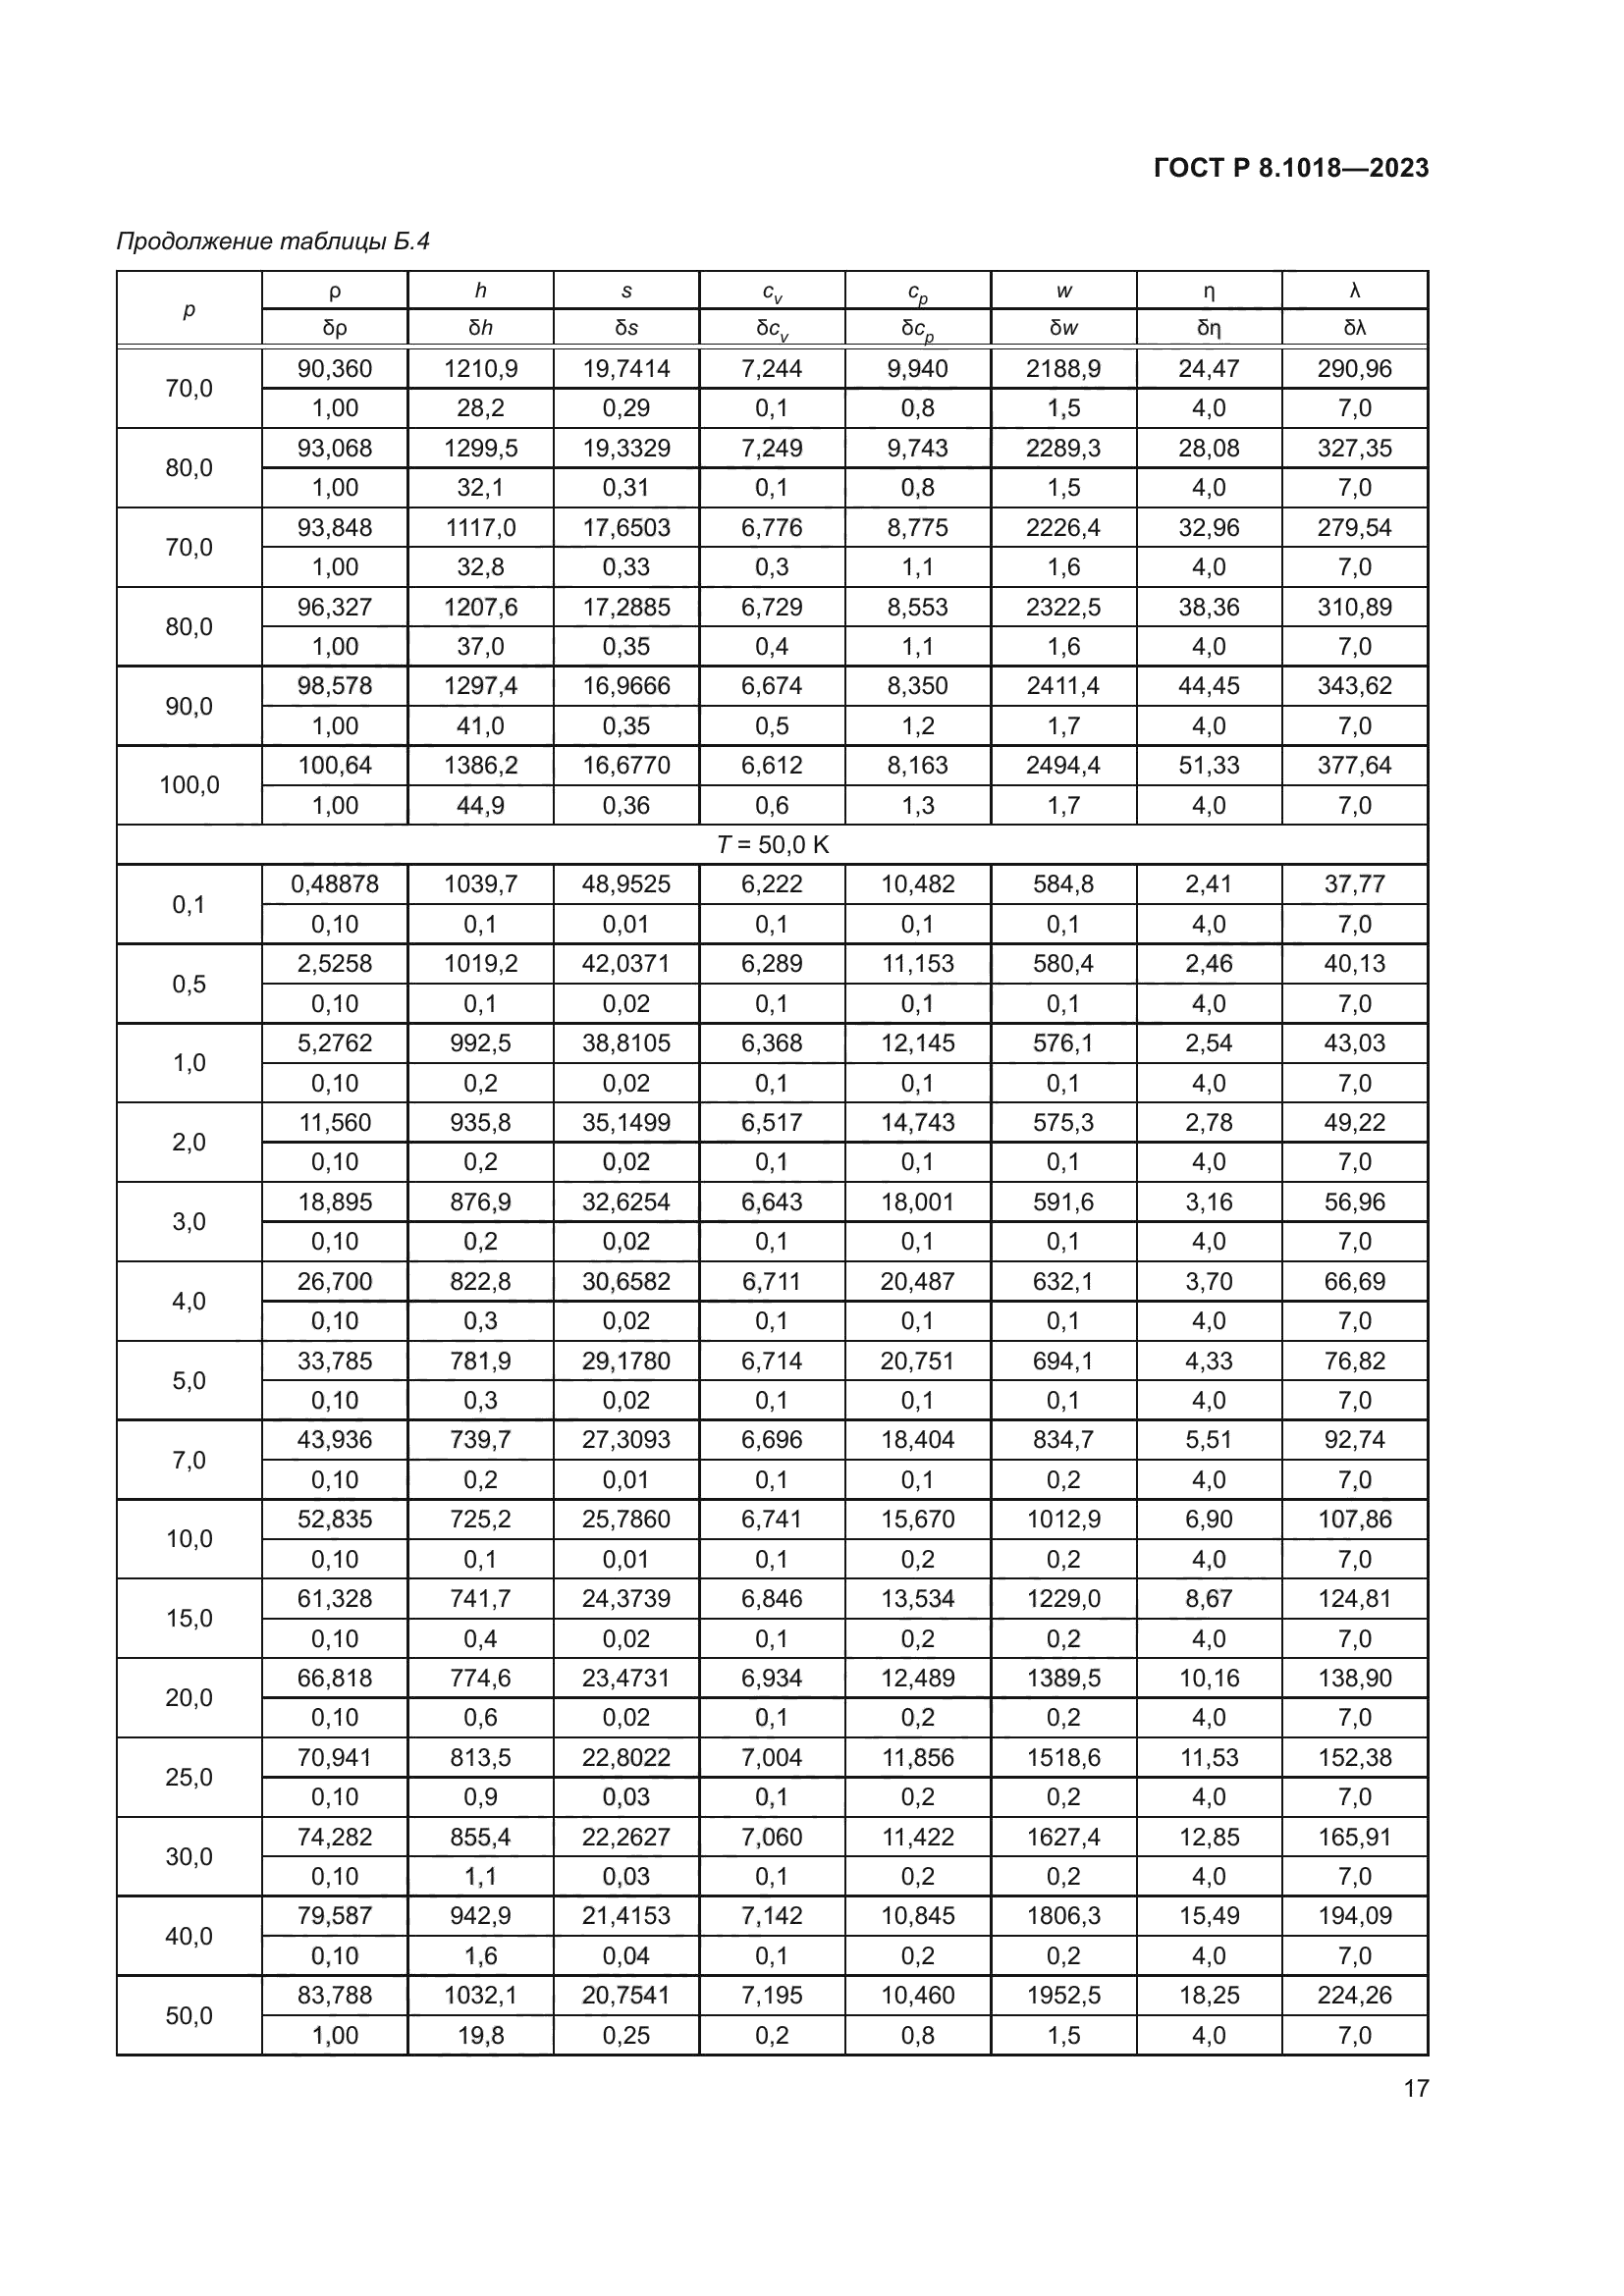 ГОСТ Р 8.1018-2023